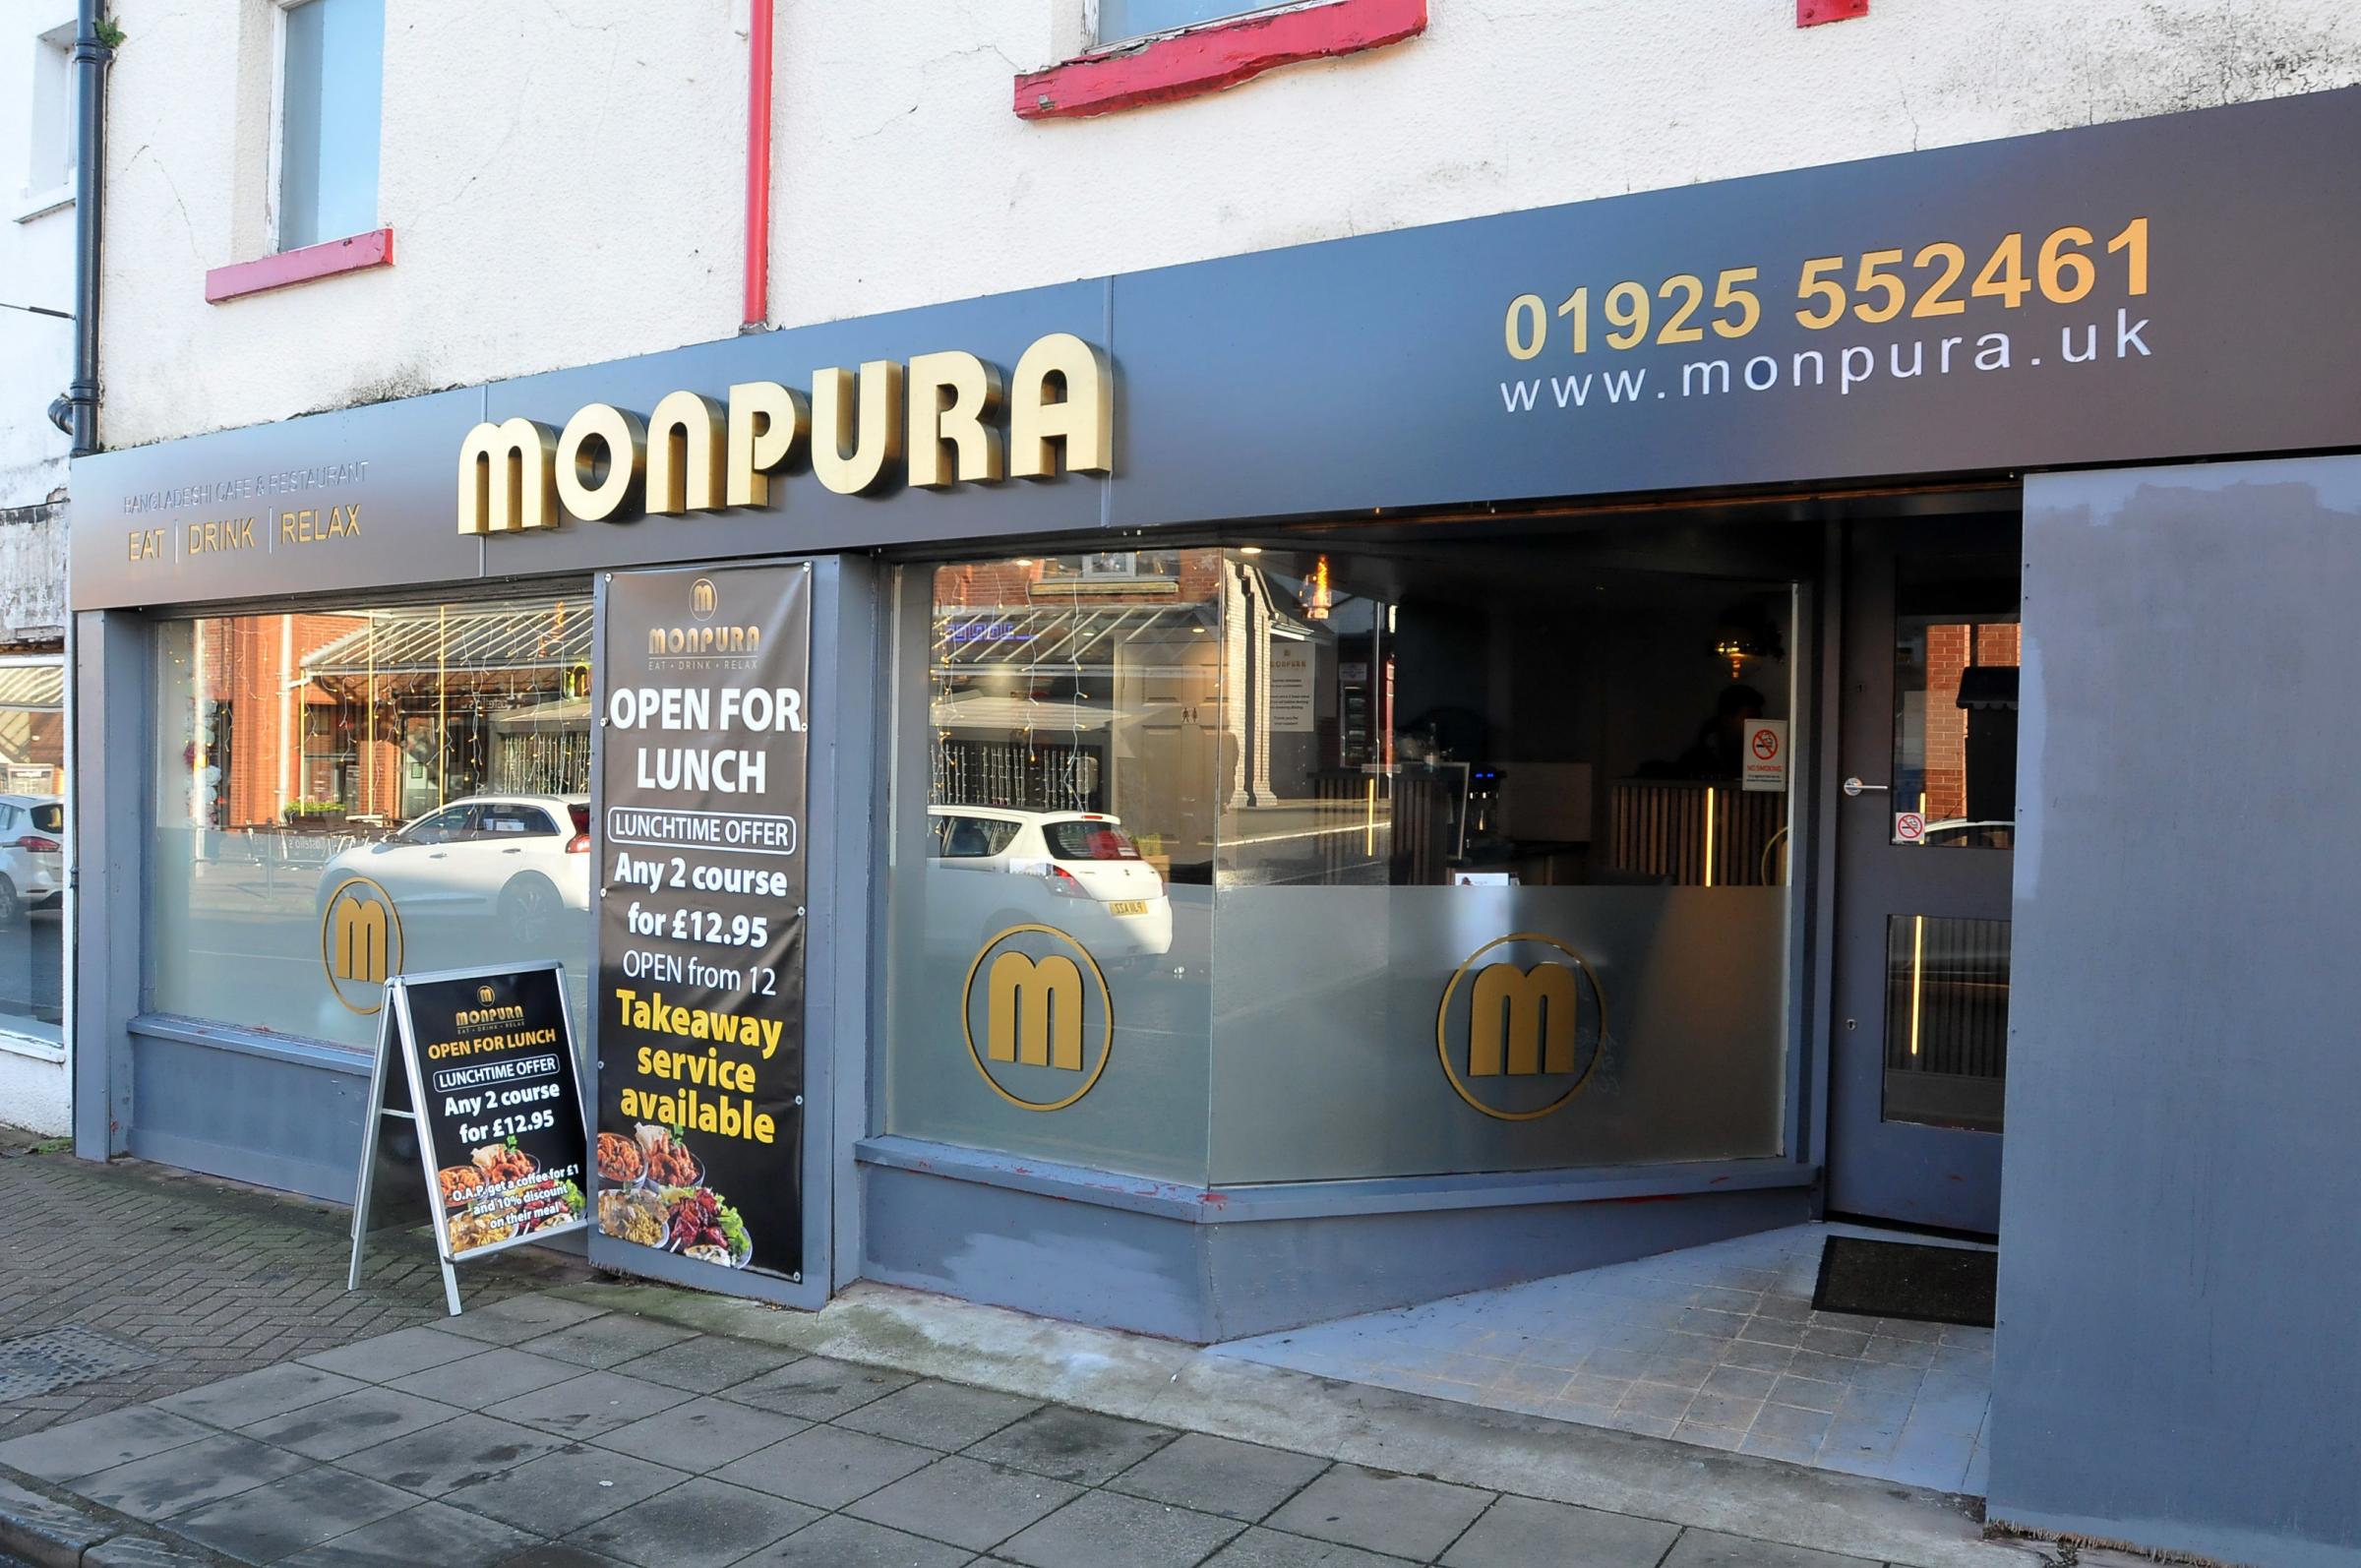 Monpura is on Walton Road in the former Little Box of Treats shop